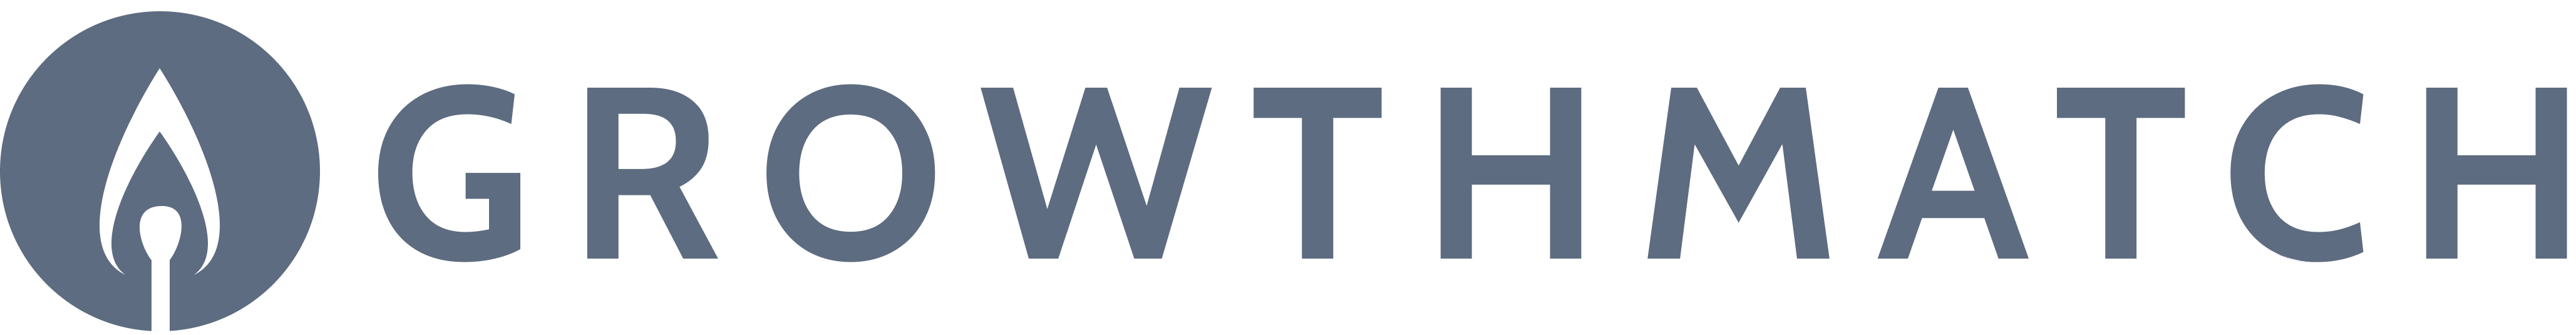 GrowthMatch Logo for White BG